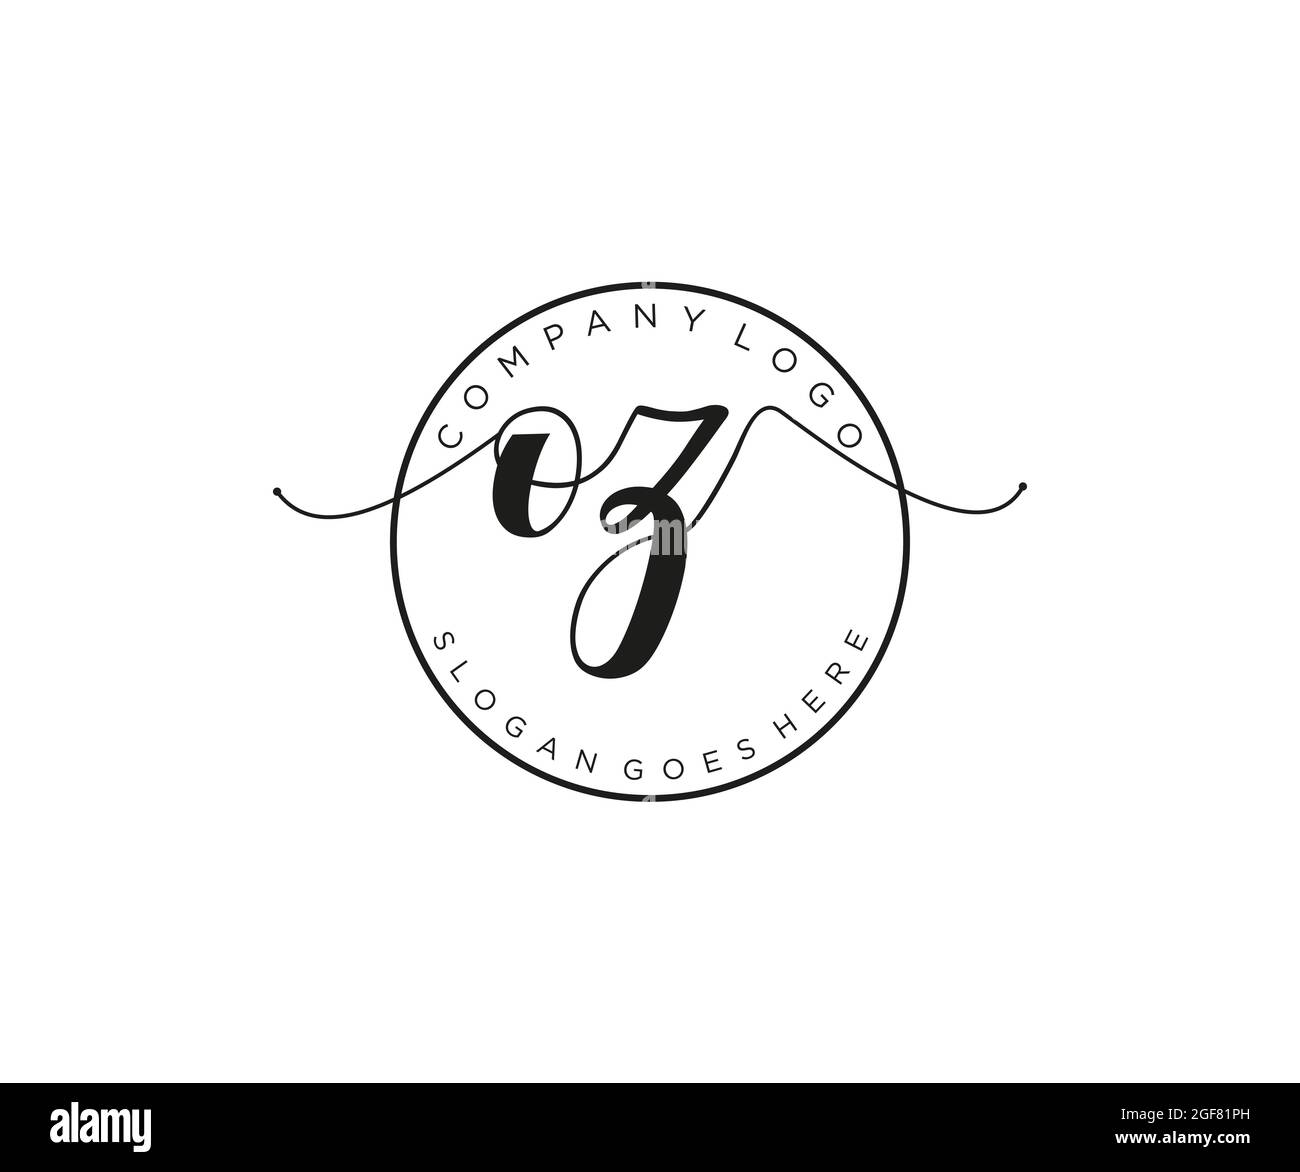 OZ Feminine logo beauty monogram and elegant logo design, handwriting logo of initial signature, wedding, fashion, floral and botanical with creative Stock Vector